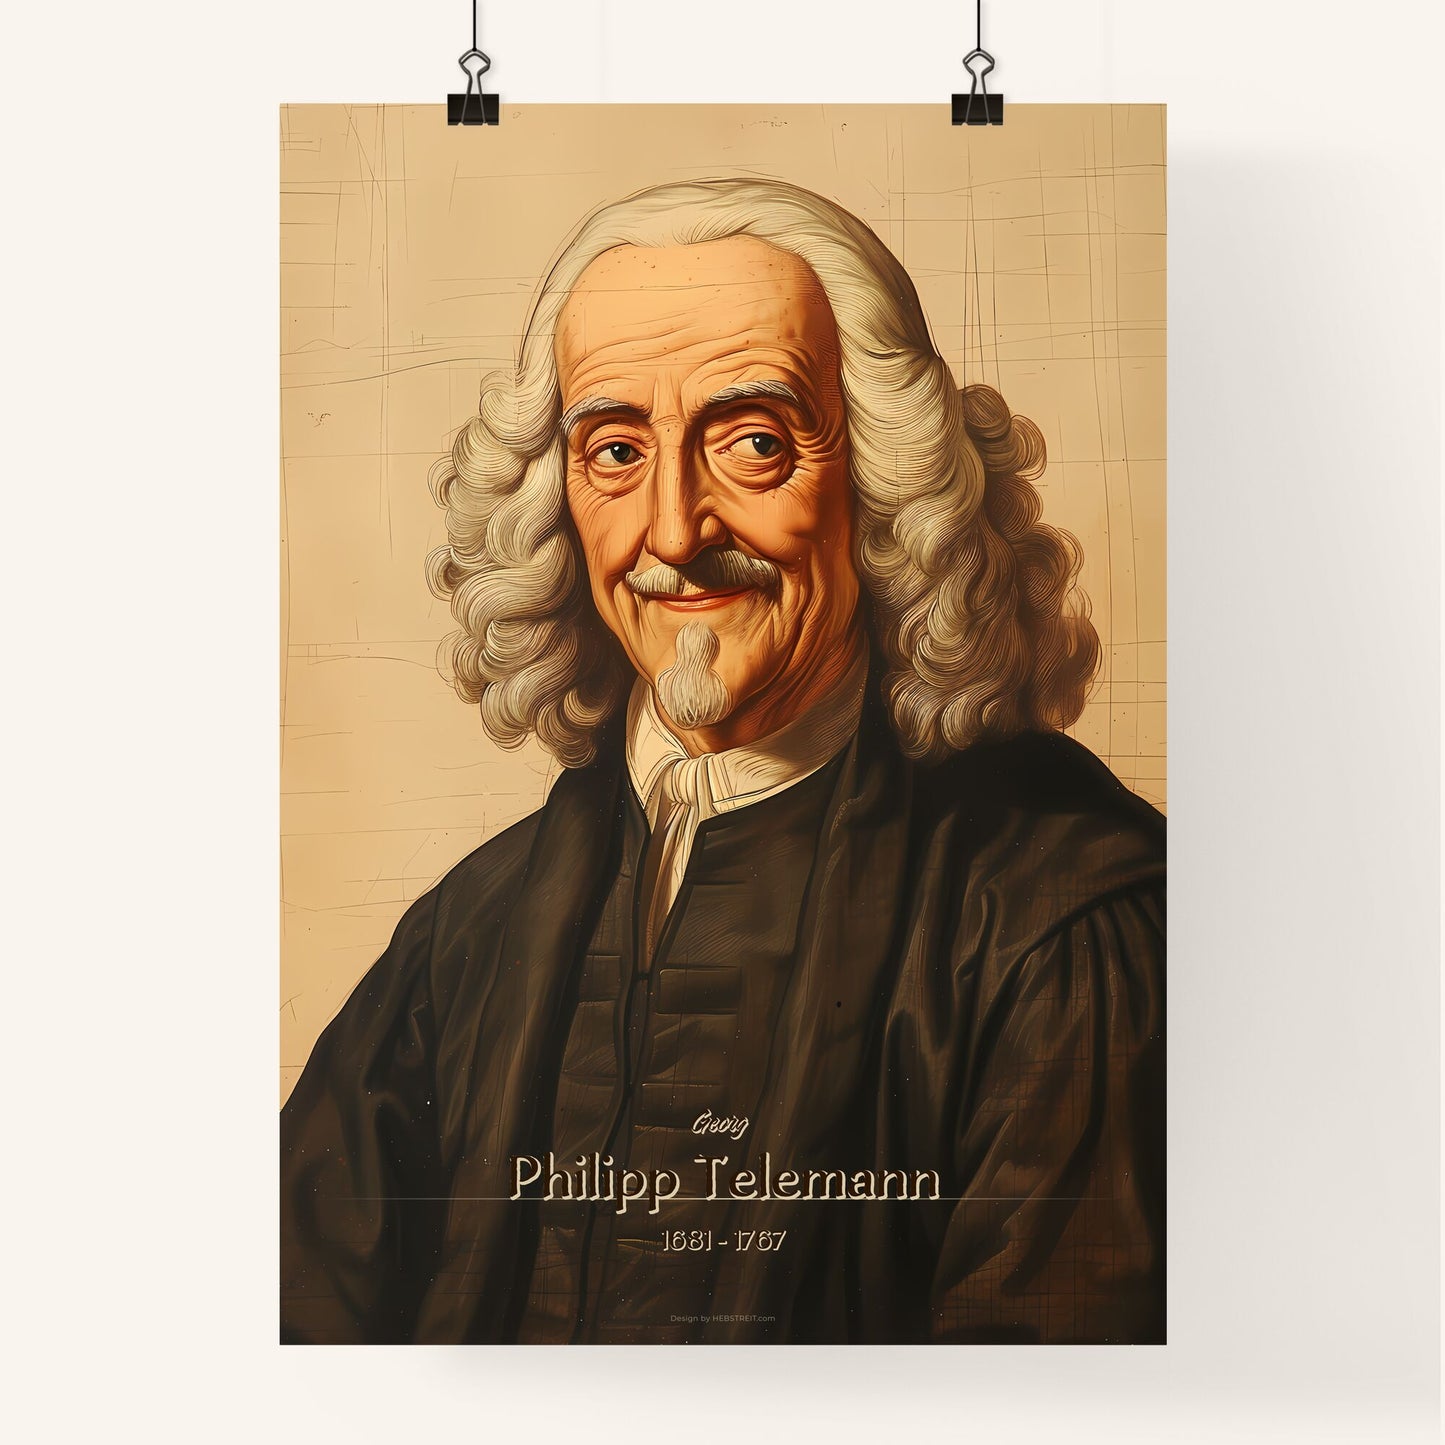 Georg, Philipp Telemann, 1681 - 1767, A Poster of a portrait of a man Default Title